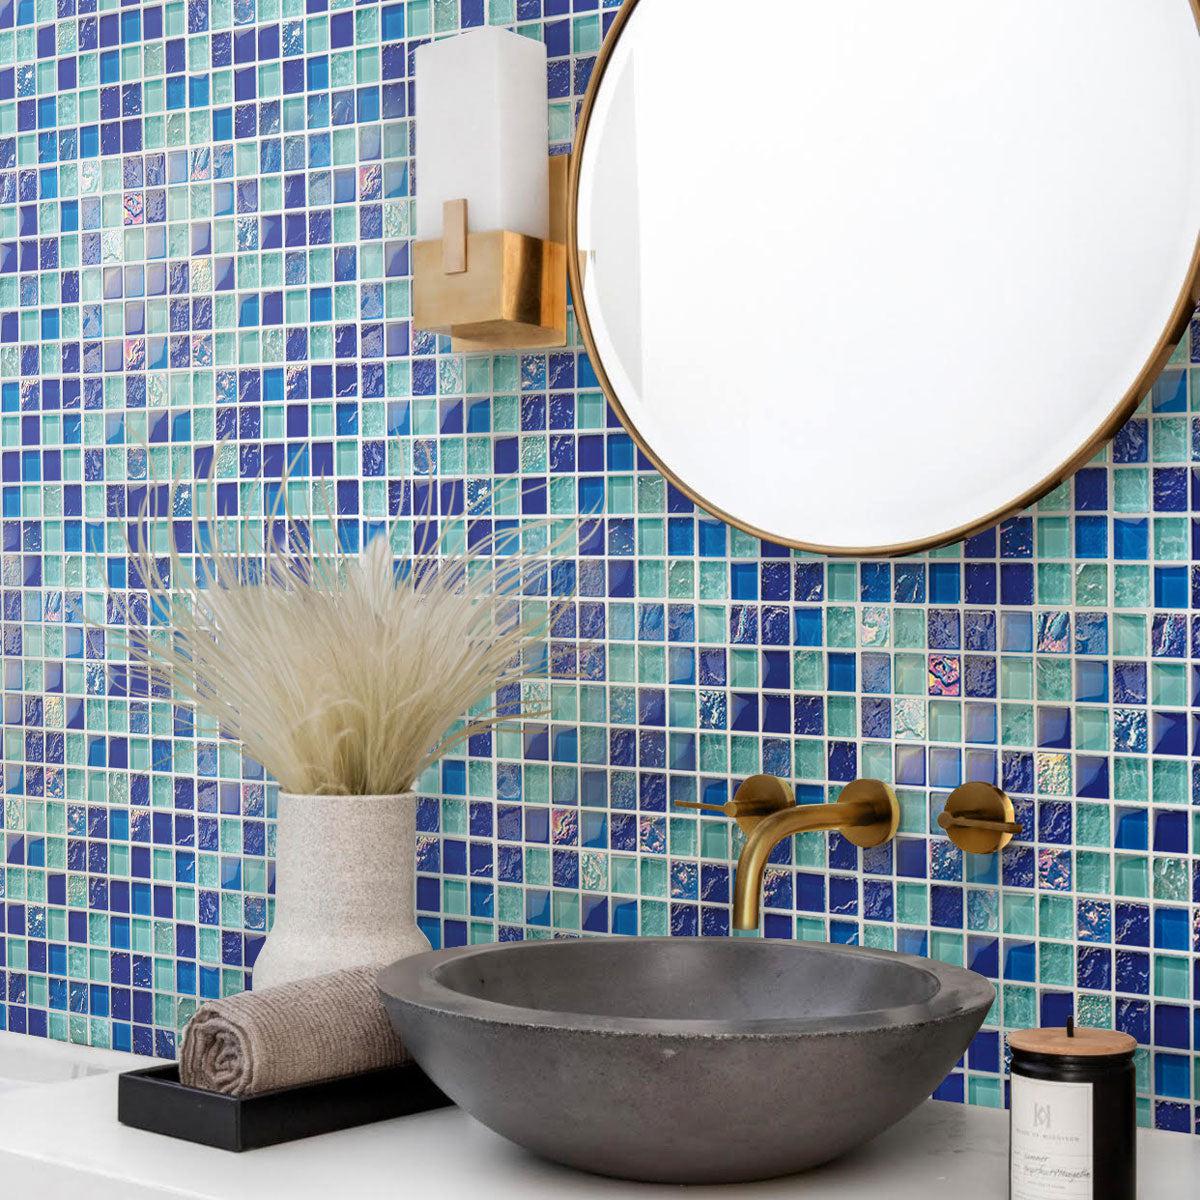 Nassau Glass Square Tile brings a refreshing coastal vibe to any bathroom